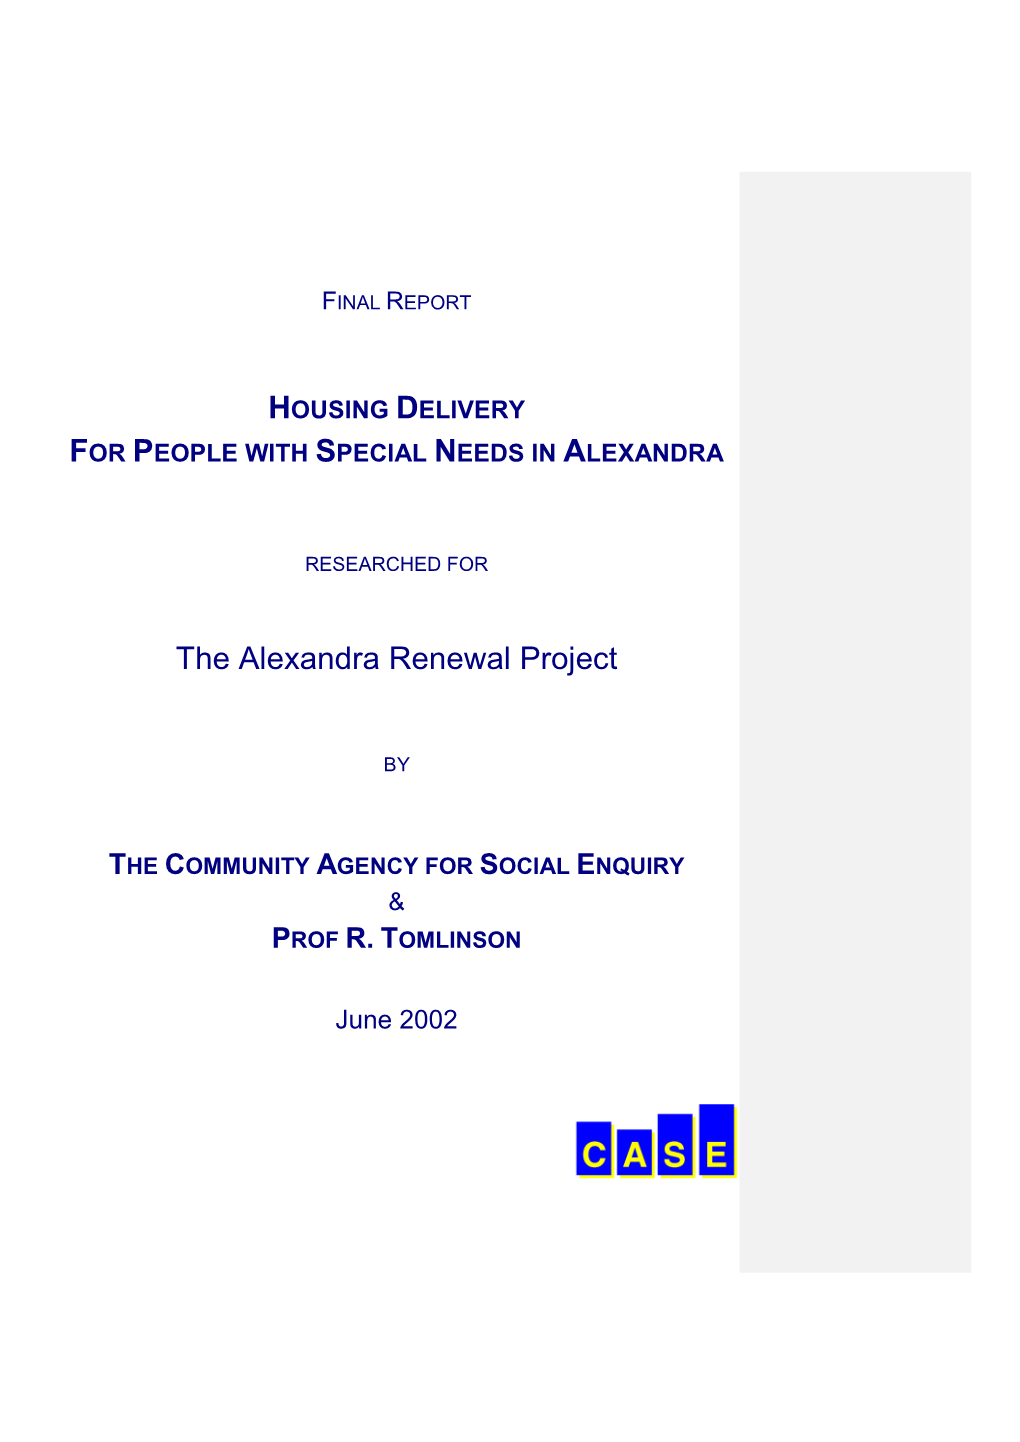 The Alexandra Renewal Project